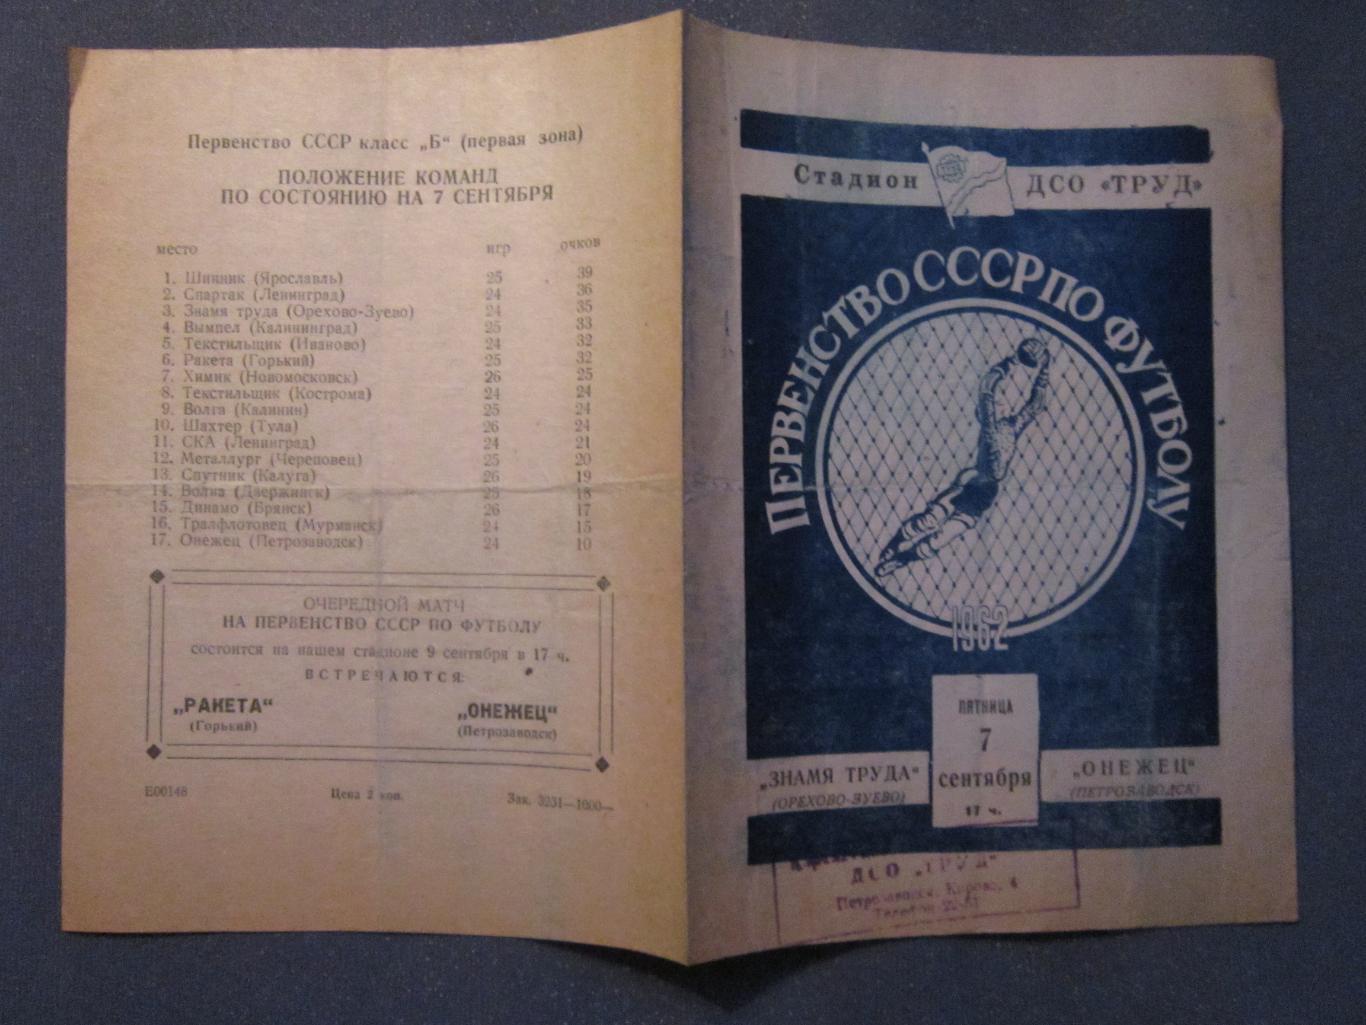 Онежец Петрозаводск-Знамя Труда Орехово-Зуево 1962 1